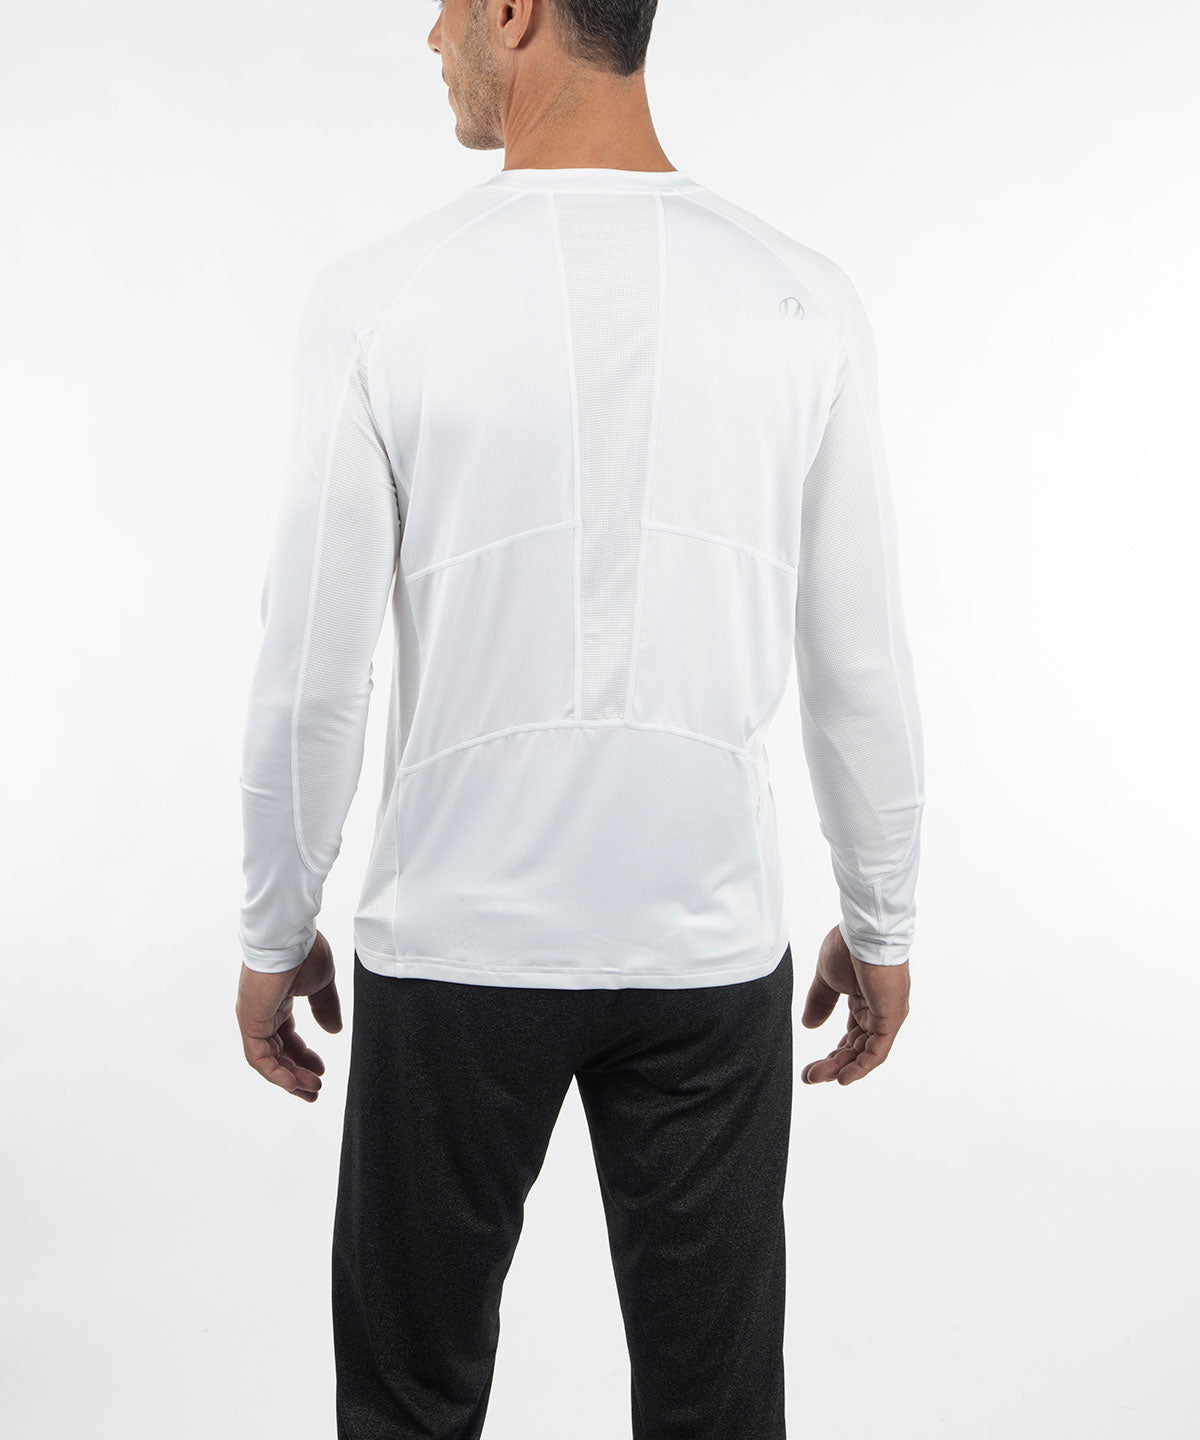 Men's Gordon Long-Sleeve Knit Tee Shirt - Sunice